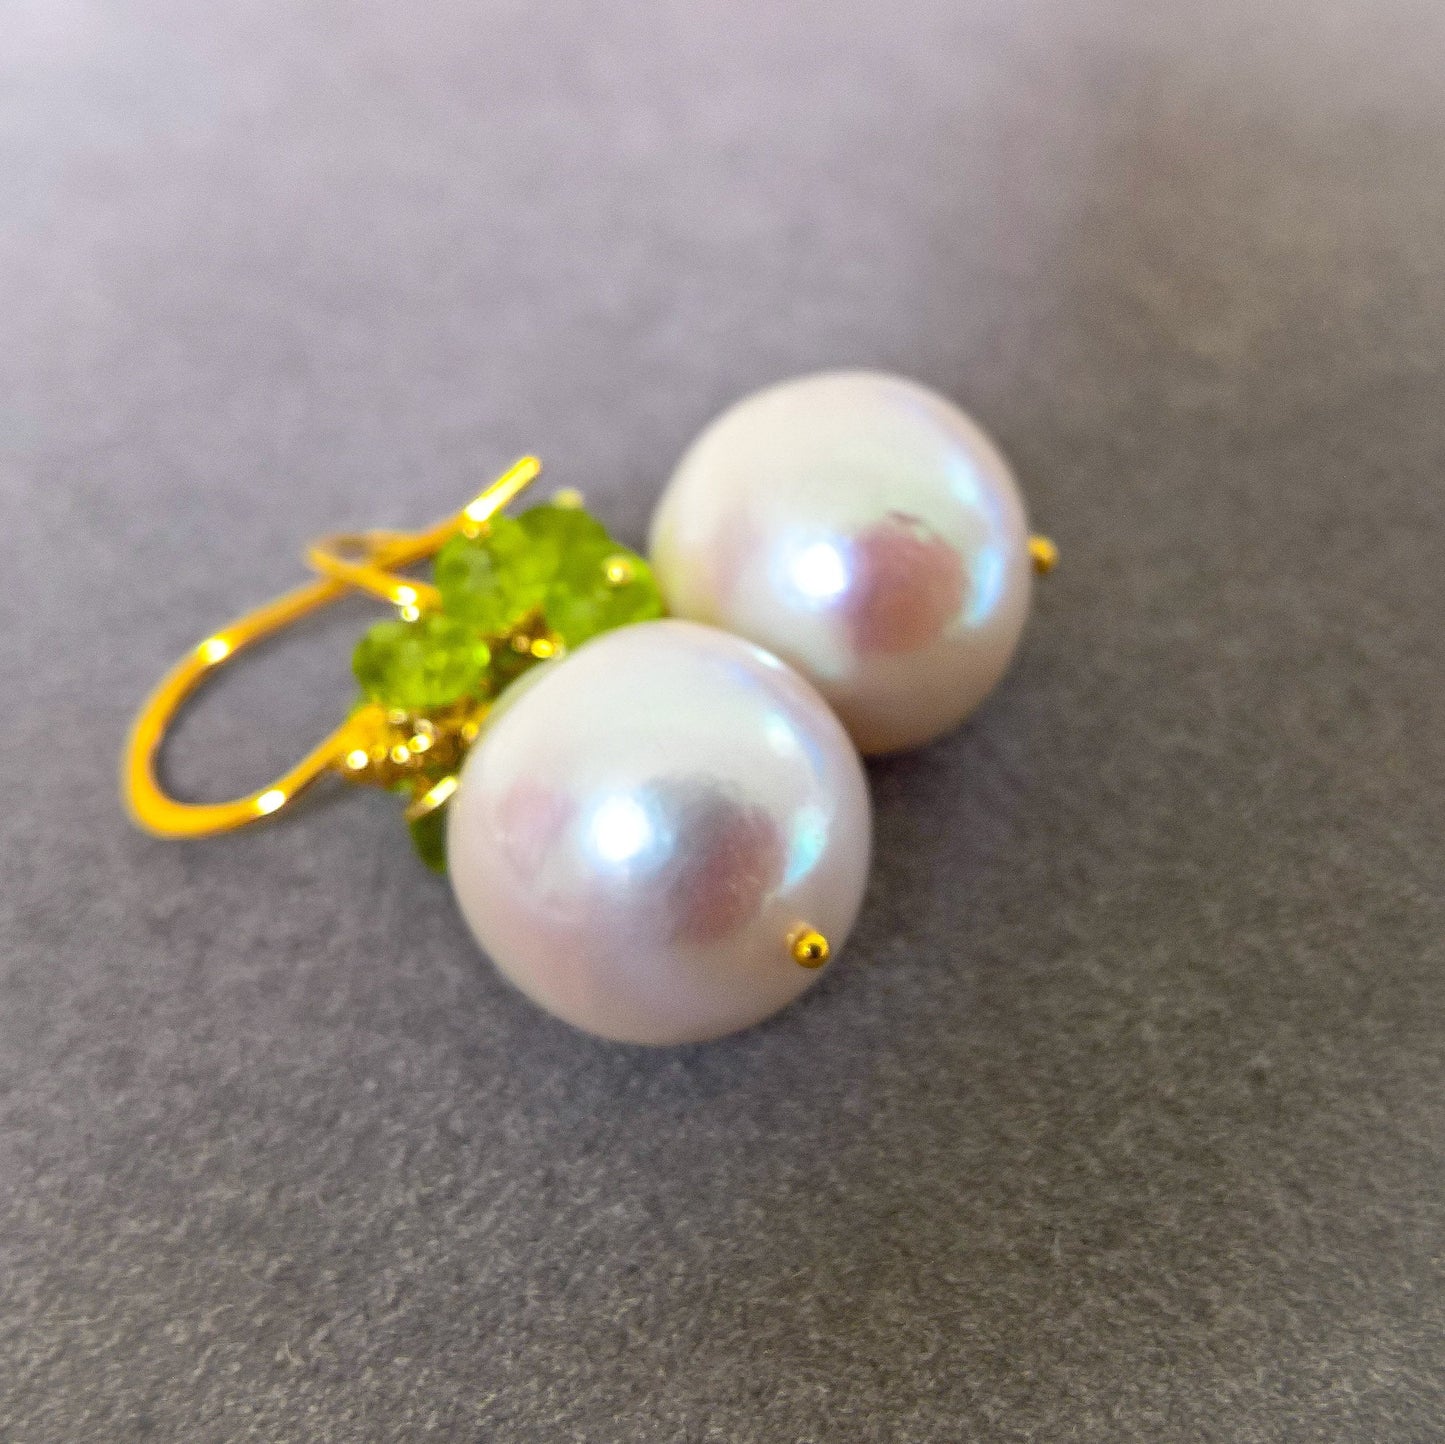 Pearl and peridot gemstone cluster earrings